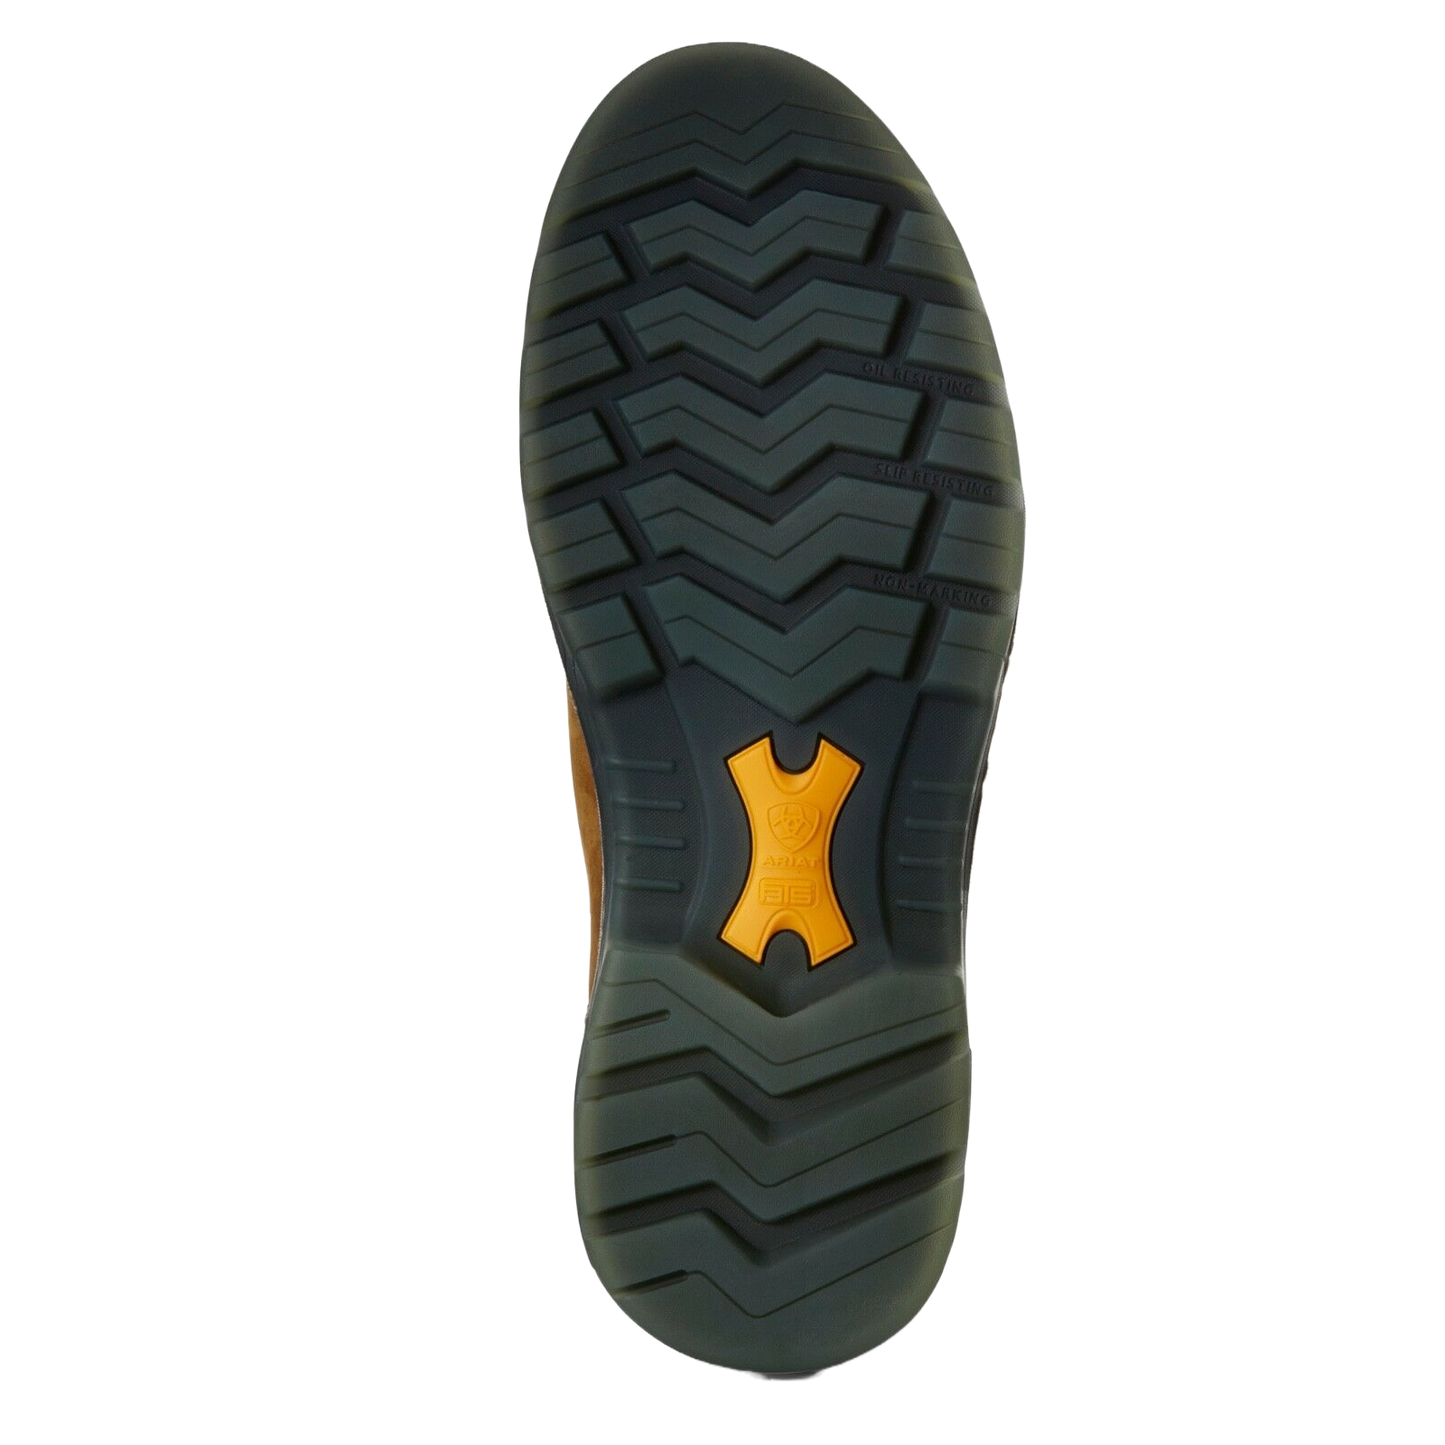 Ariat® Men's Turbo Chelsea H2O Composite Toe Work Boots 10027331